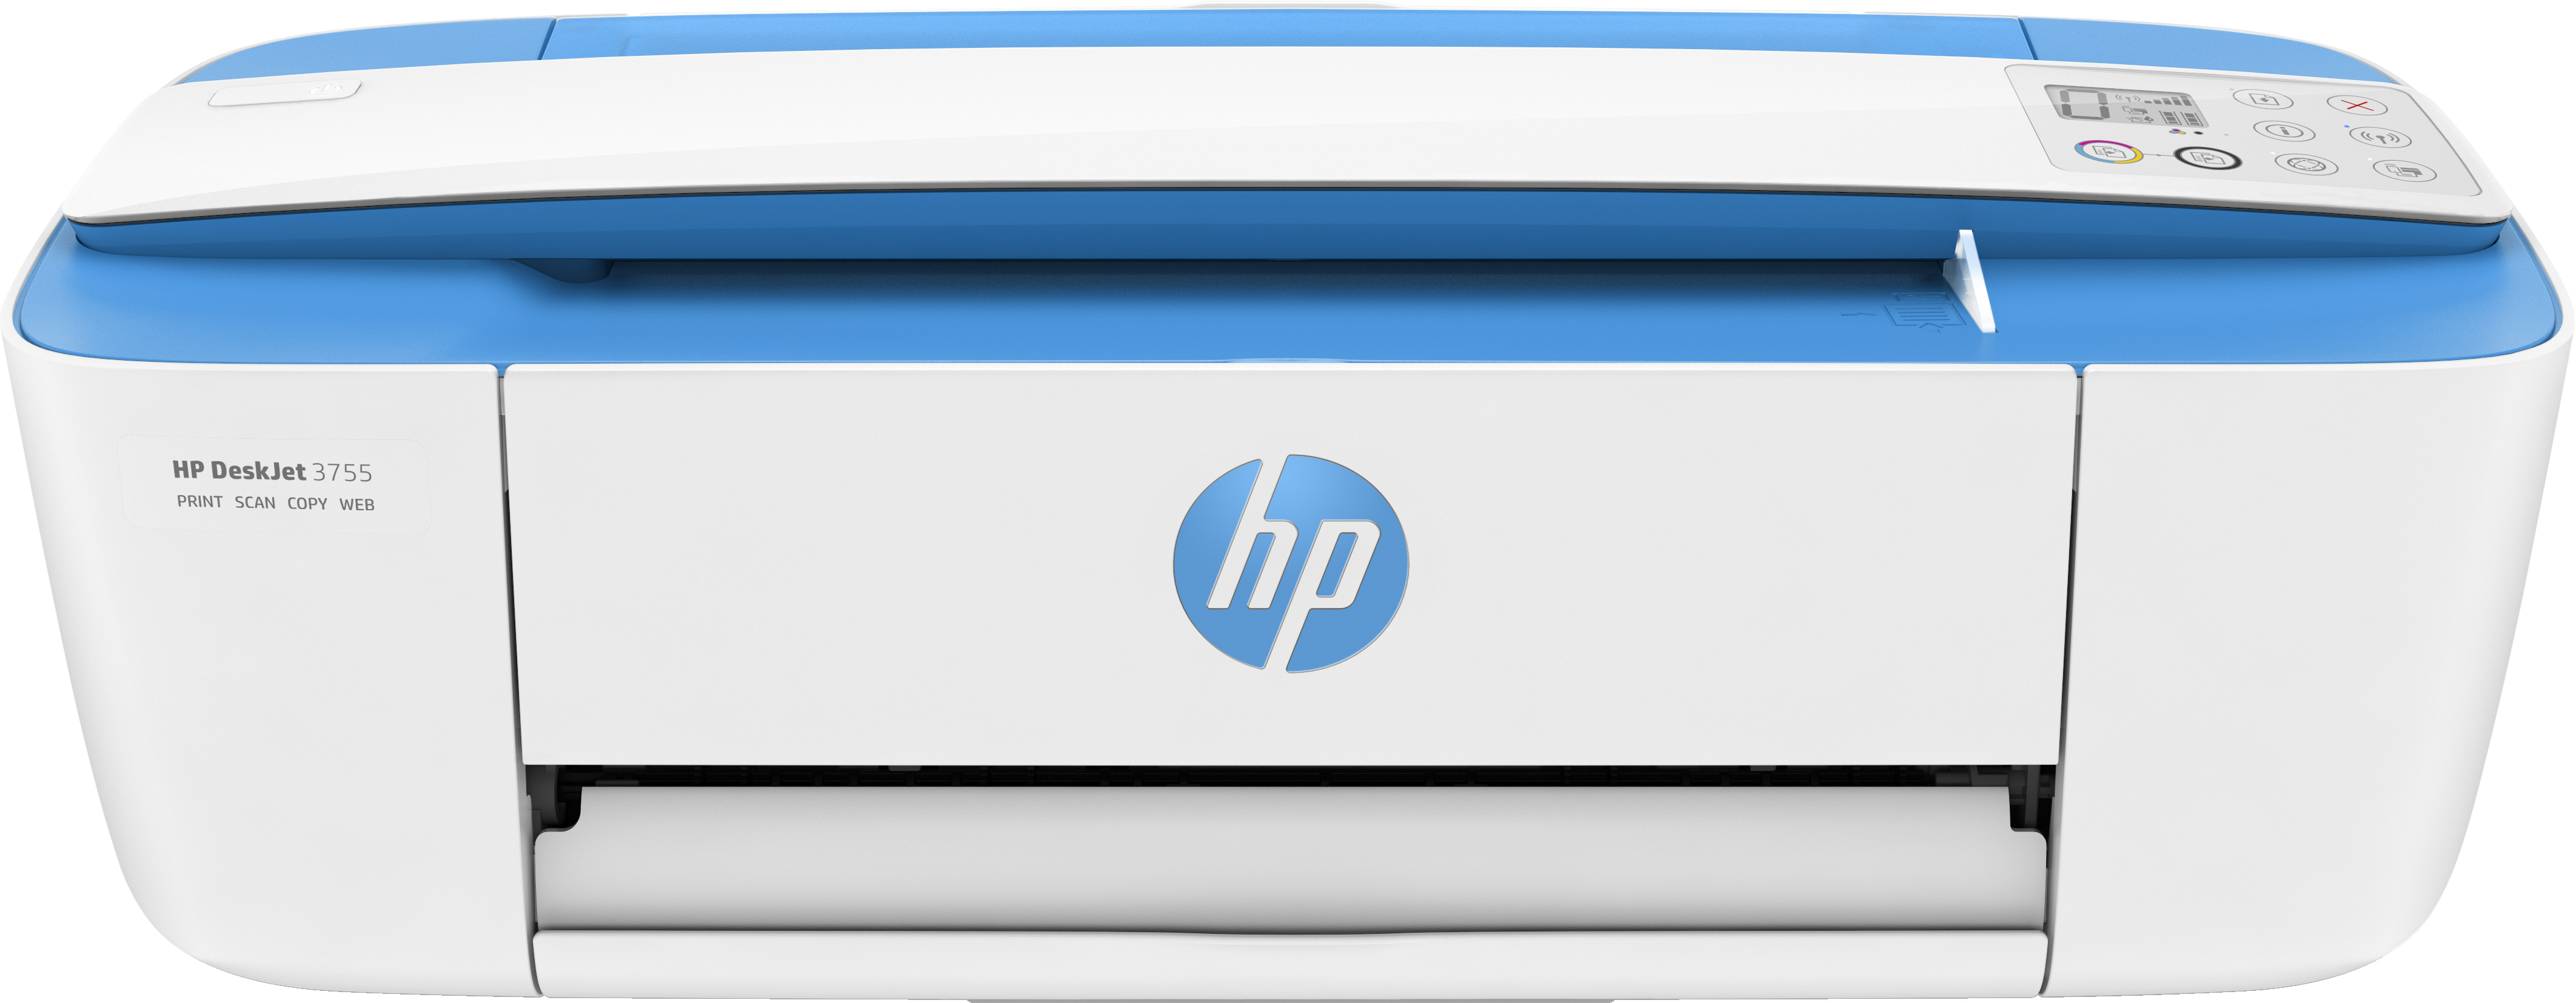 hp deskjet 3760 all-in-one printer, color, printer for home,...